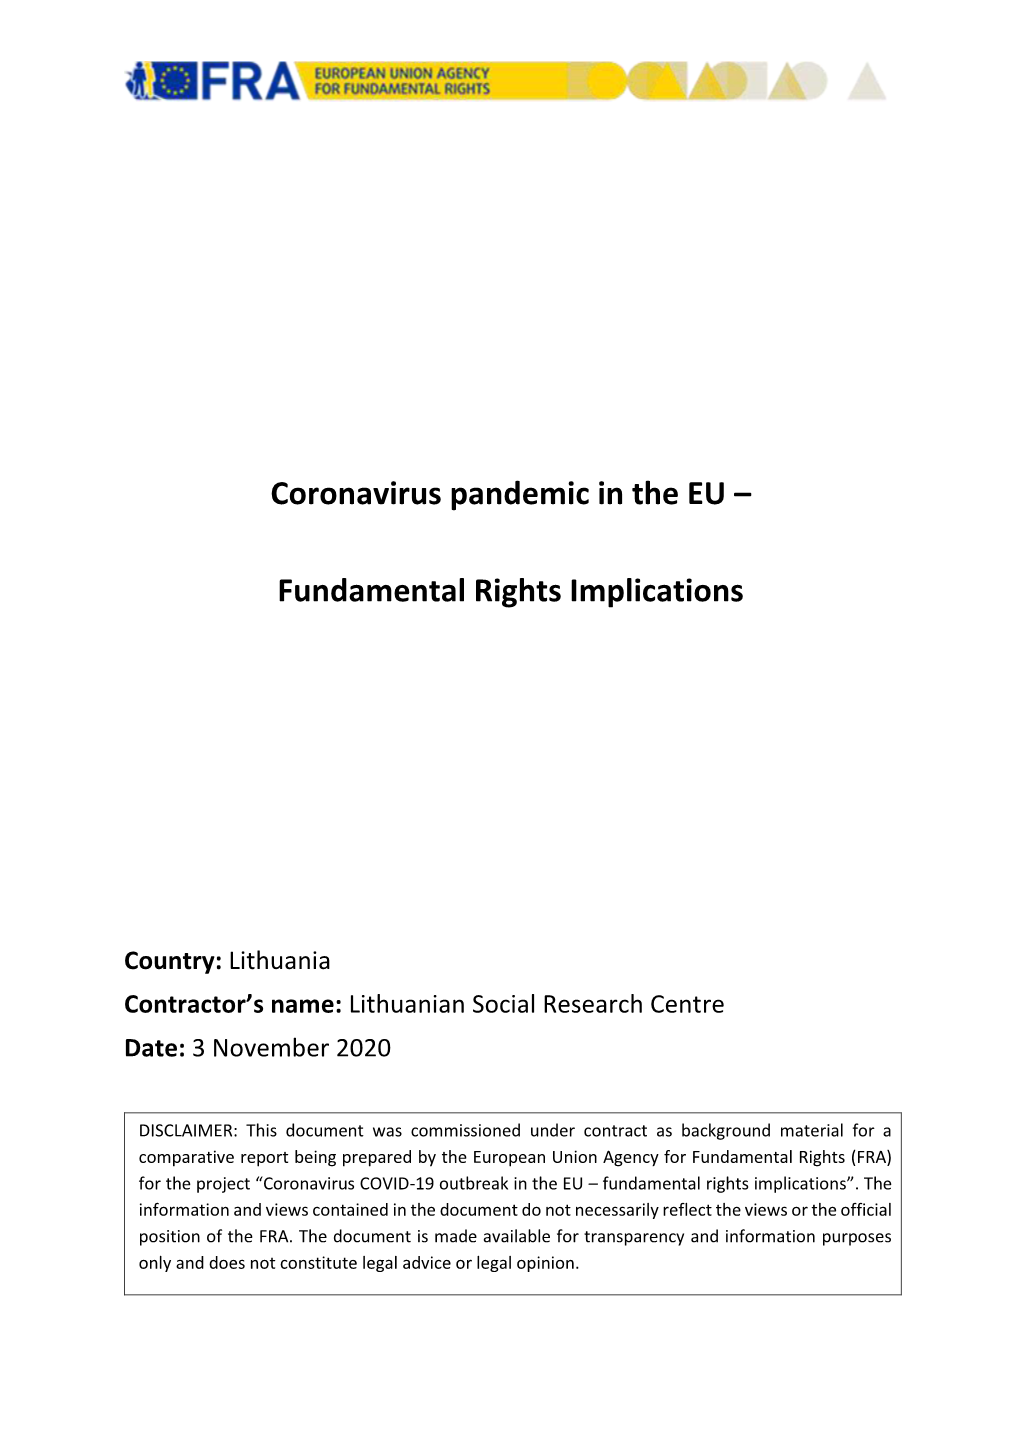 Coronavirus Pandemic in the EU – Fundamental Rights Implications